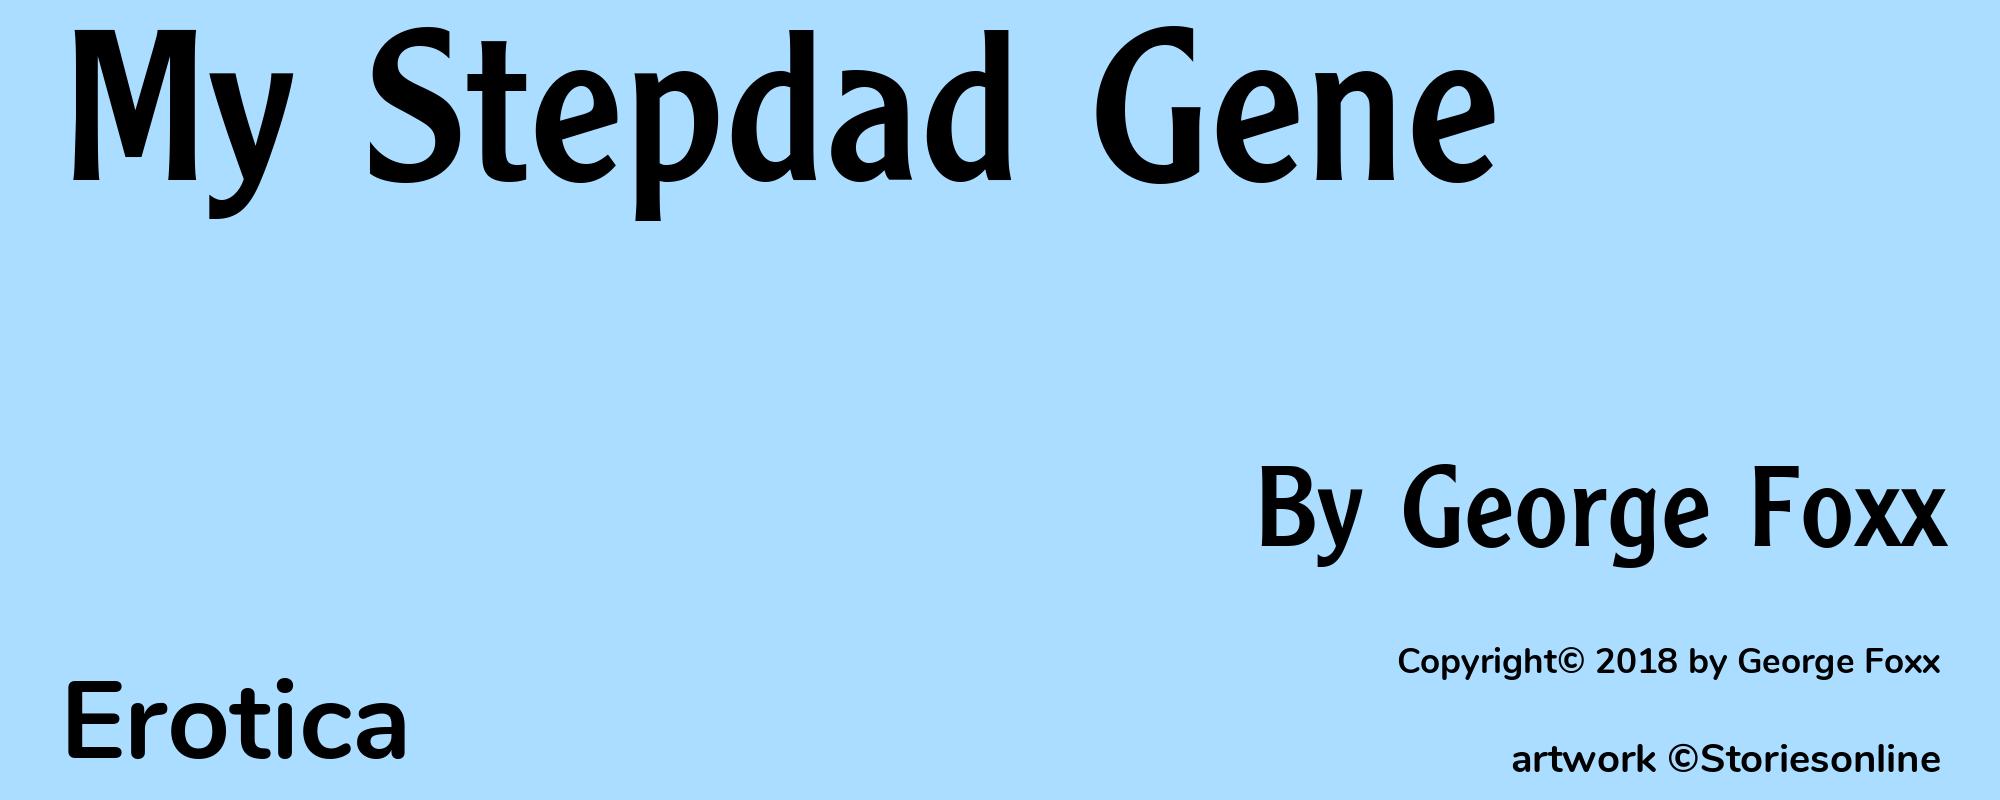 My Stepdad Gene - Cover